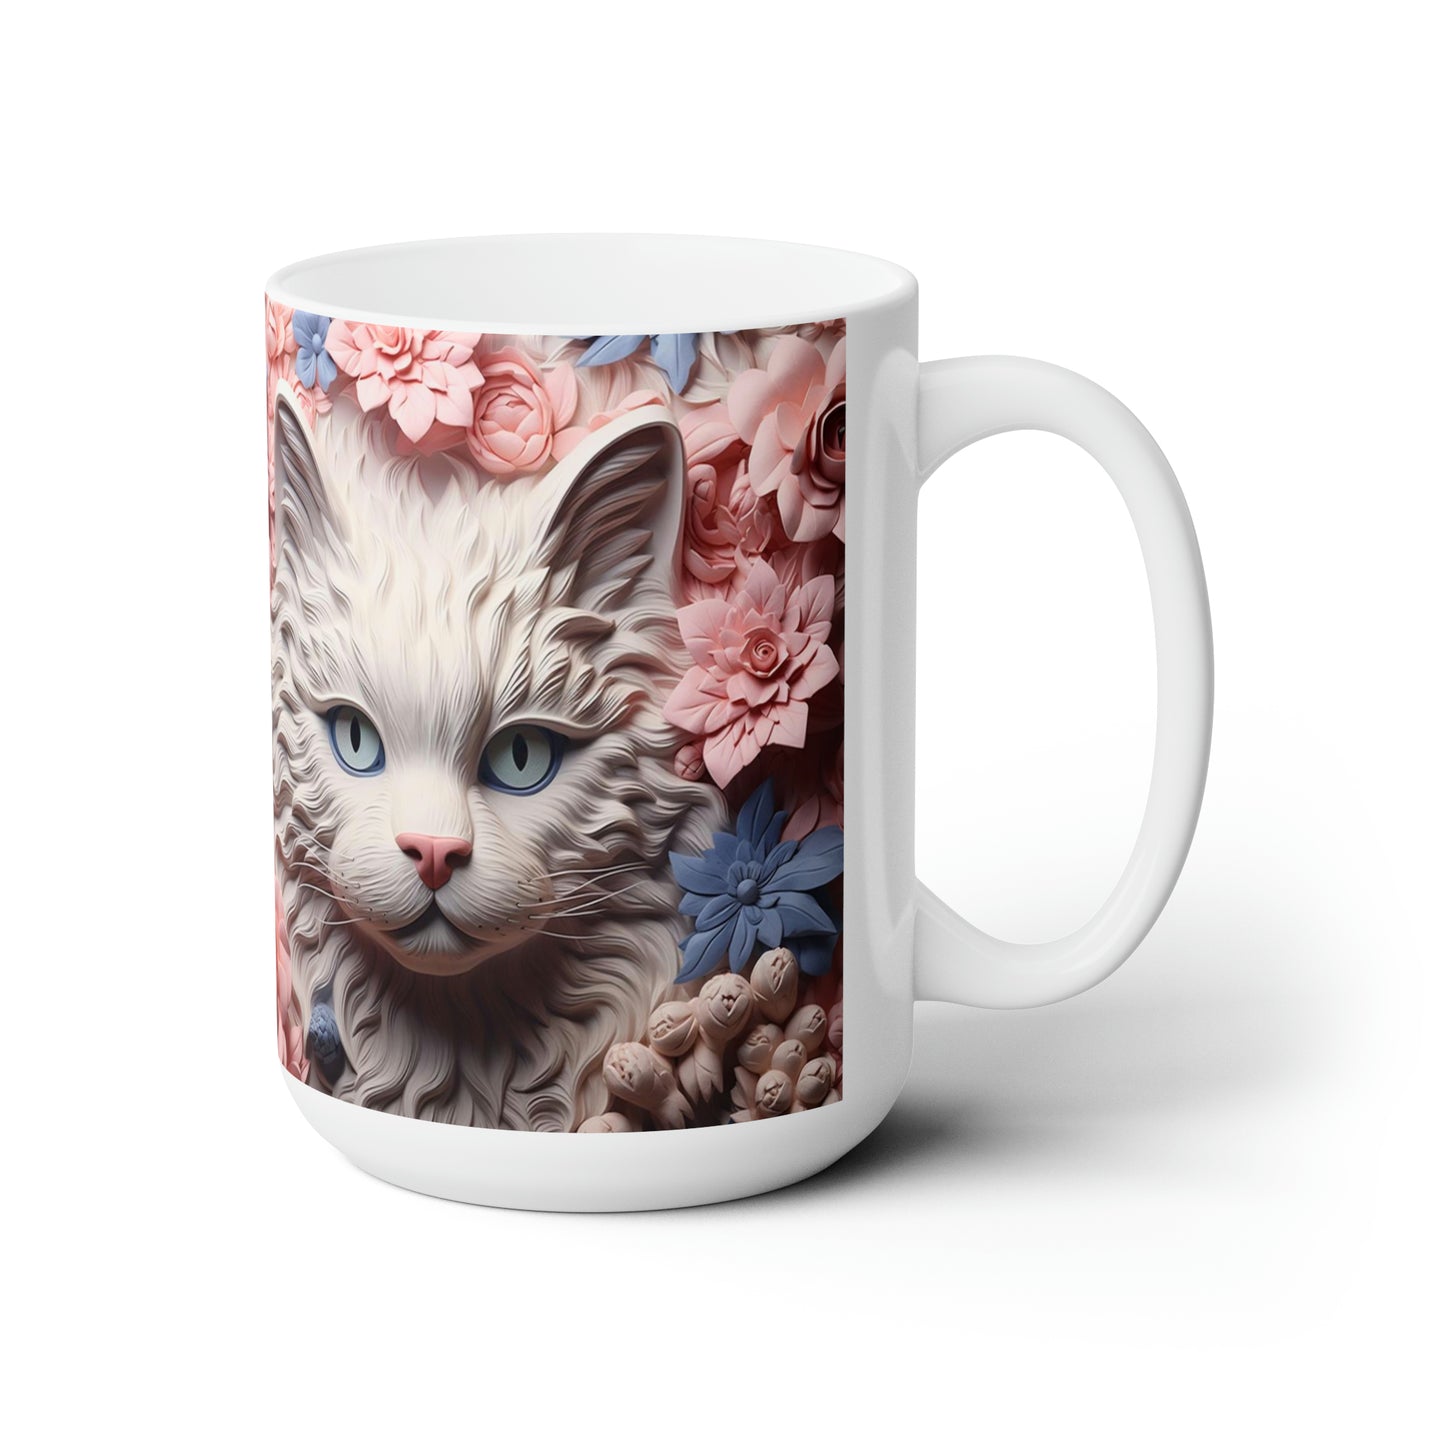 3D Look White Cat Ceramic Mug 15oz